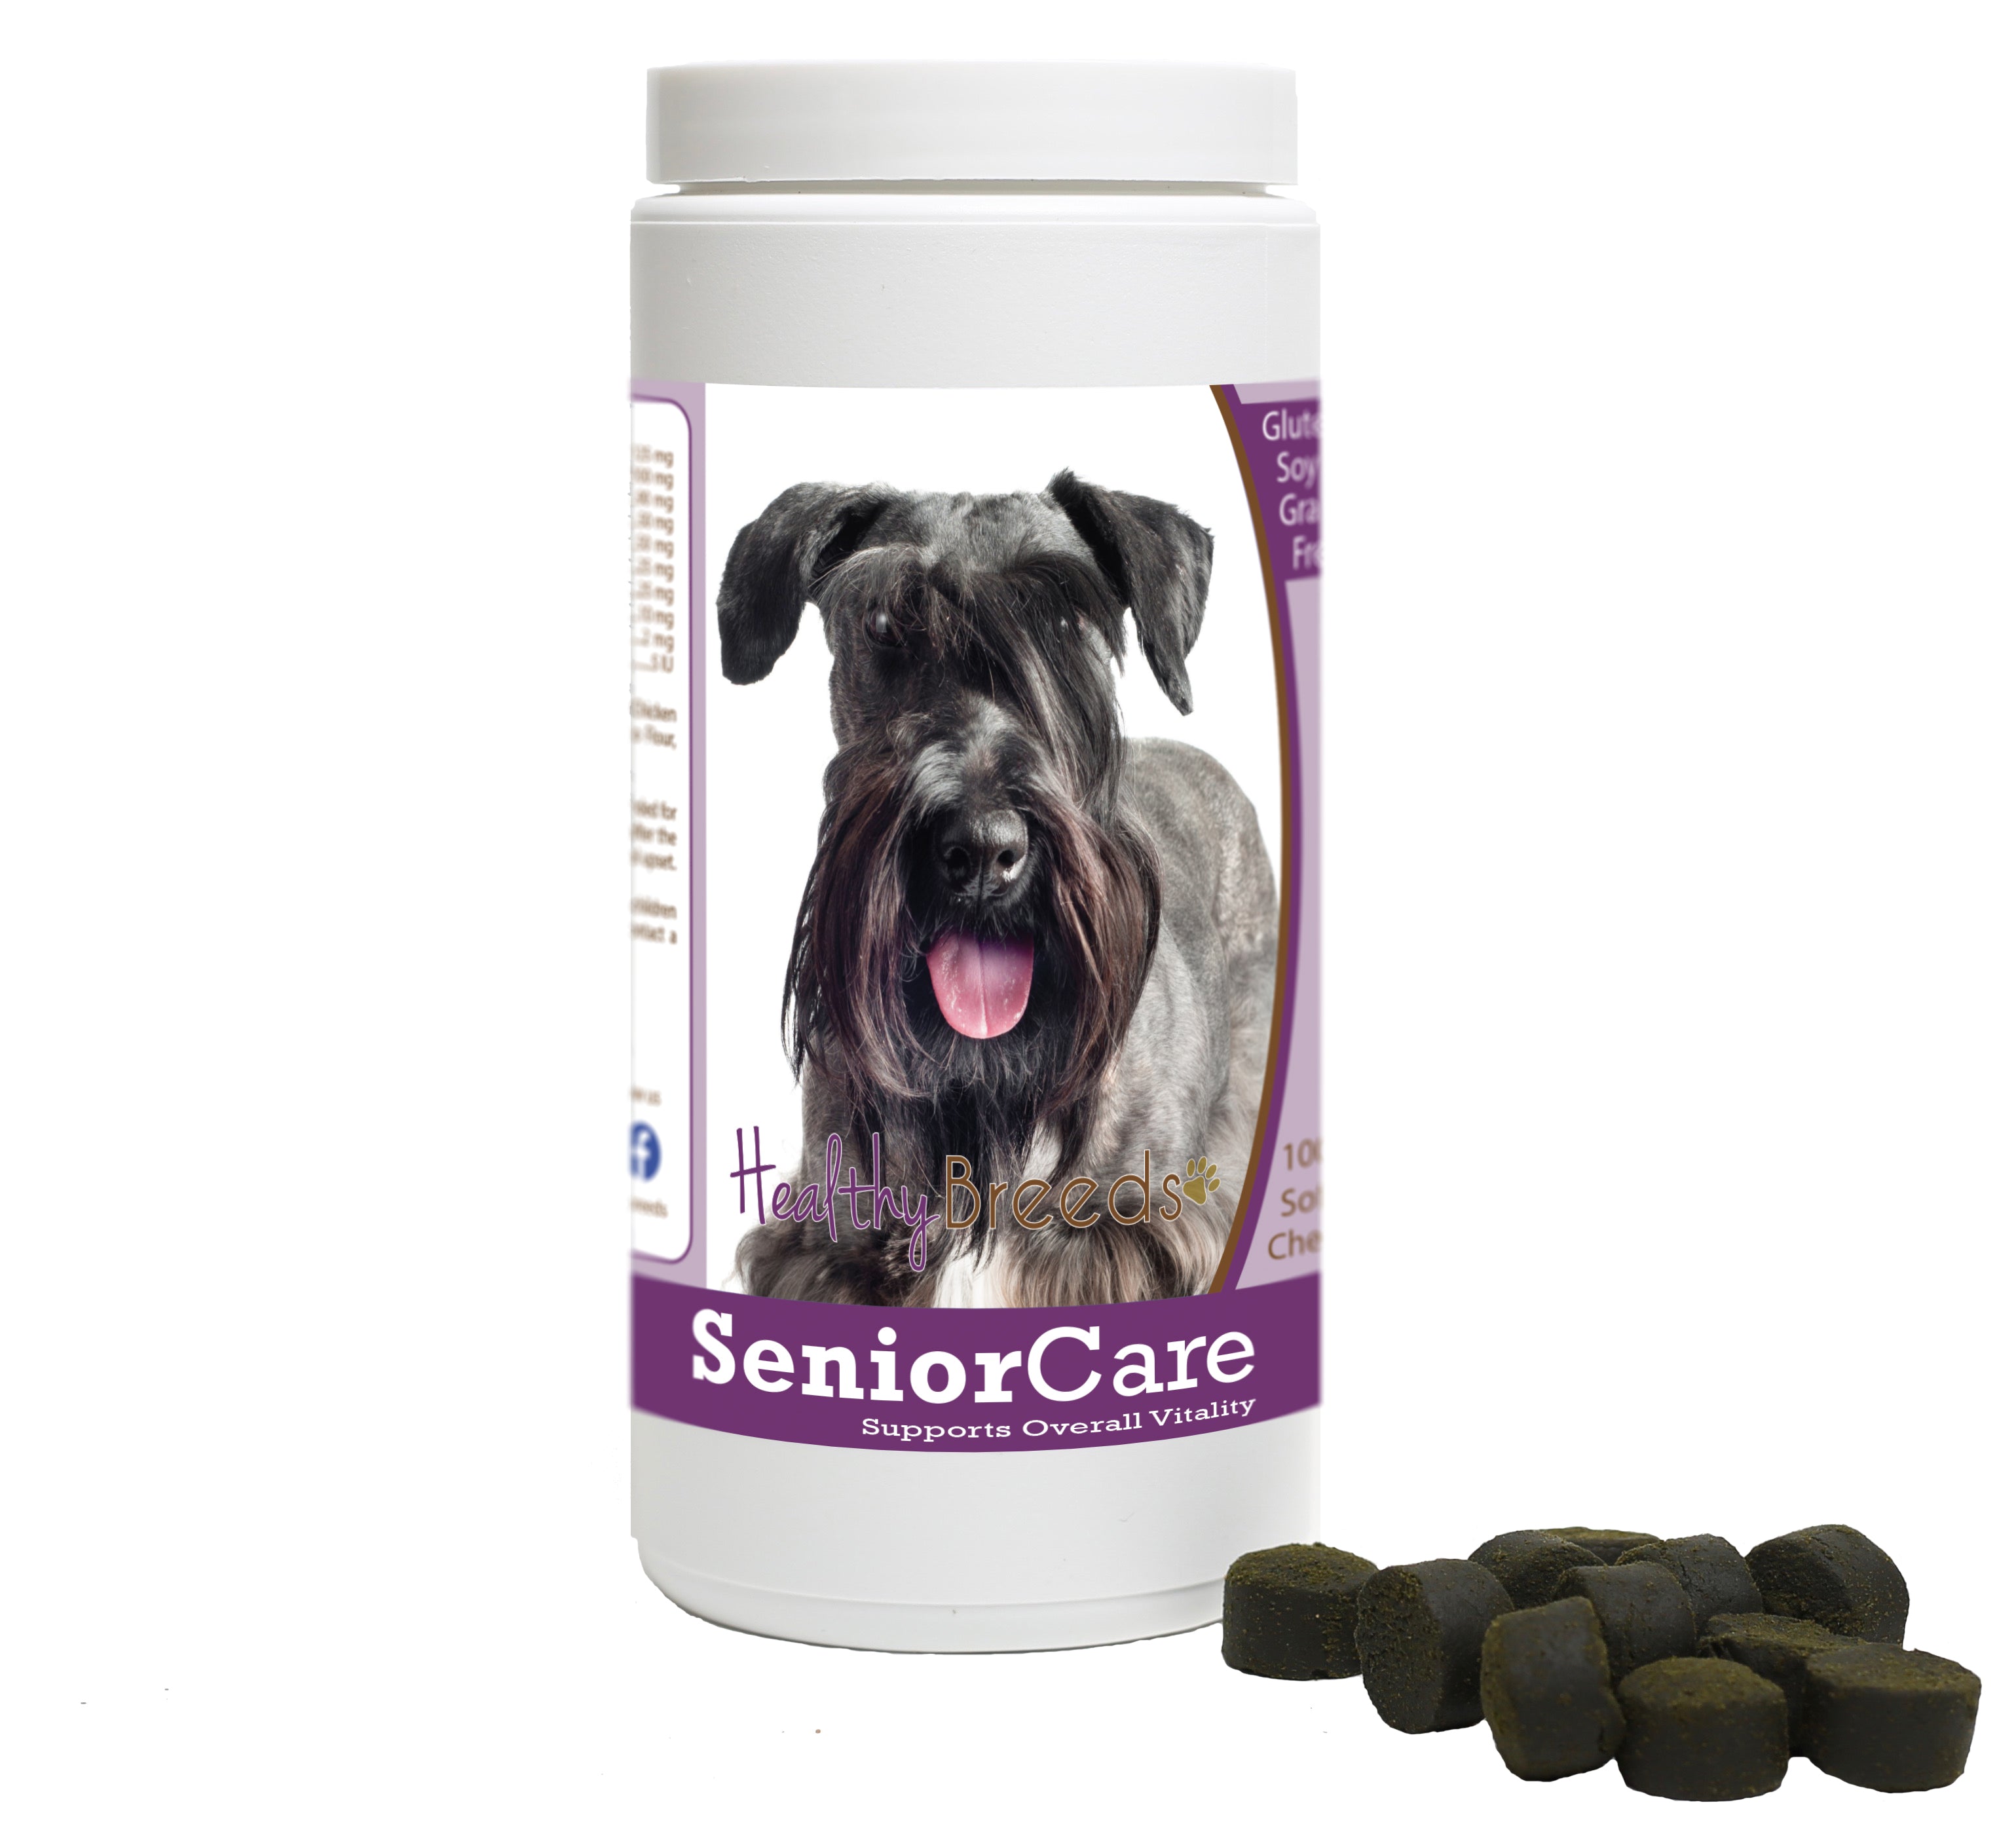 Cesky Terrier Senior Dog Care Soft Chews 100 Count